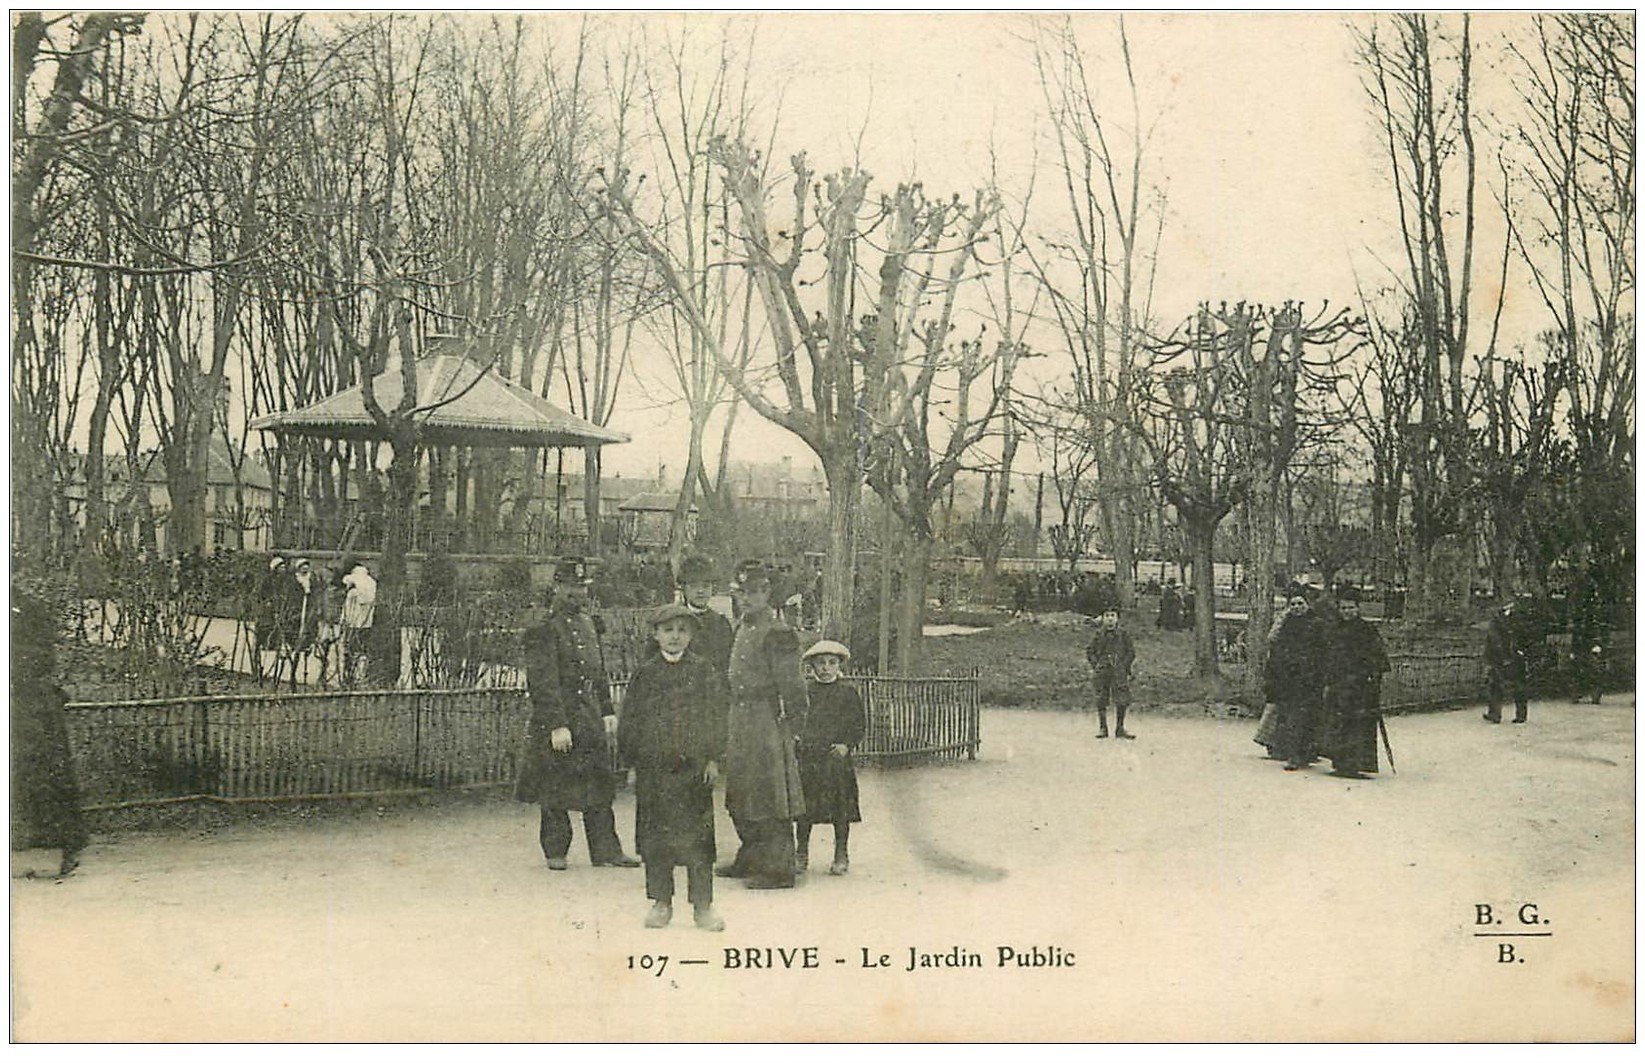 19 BRIVE. Le Jardin Public 1907